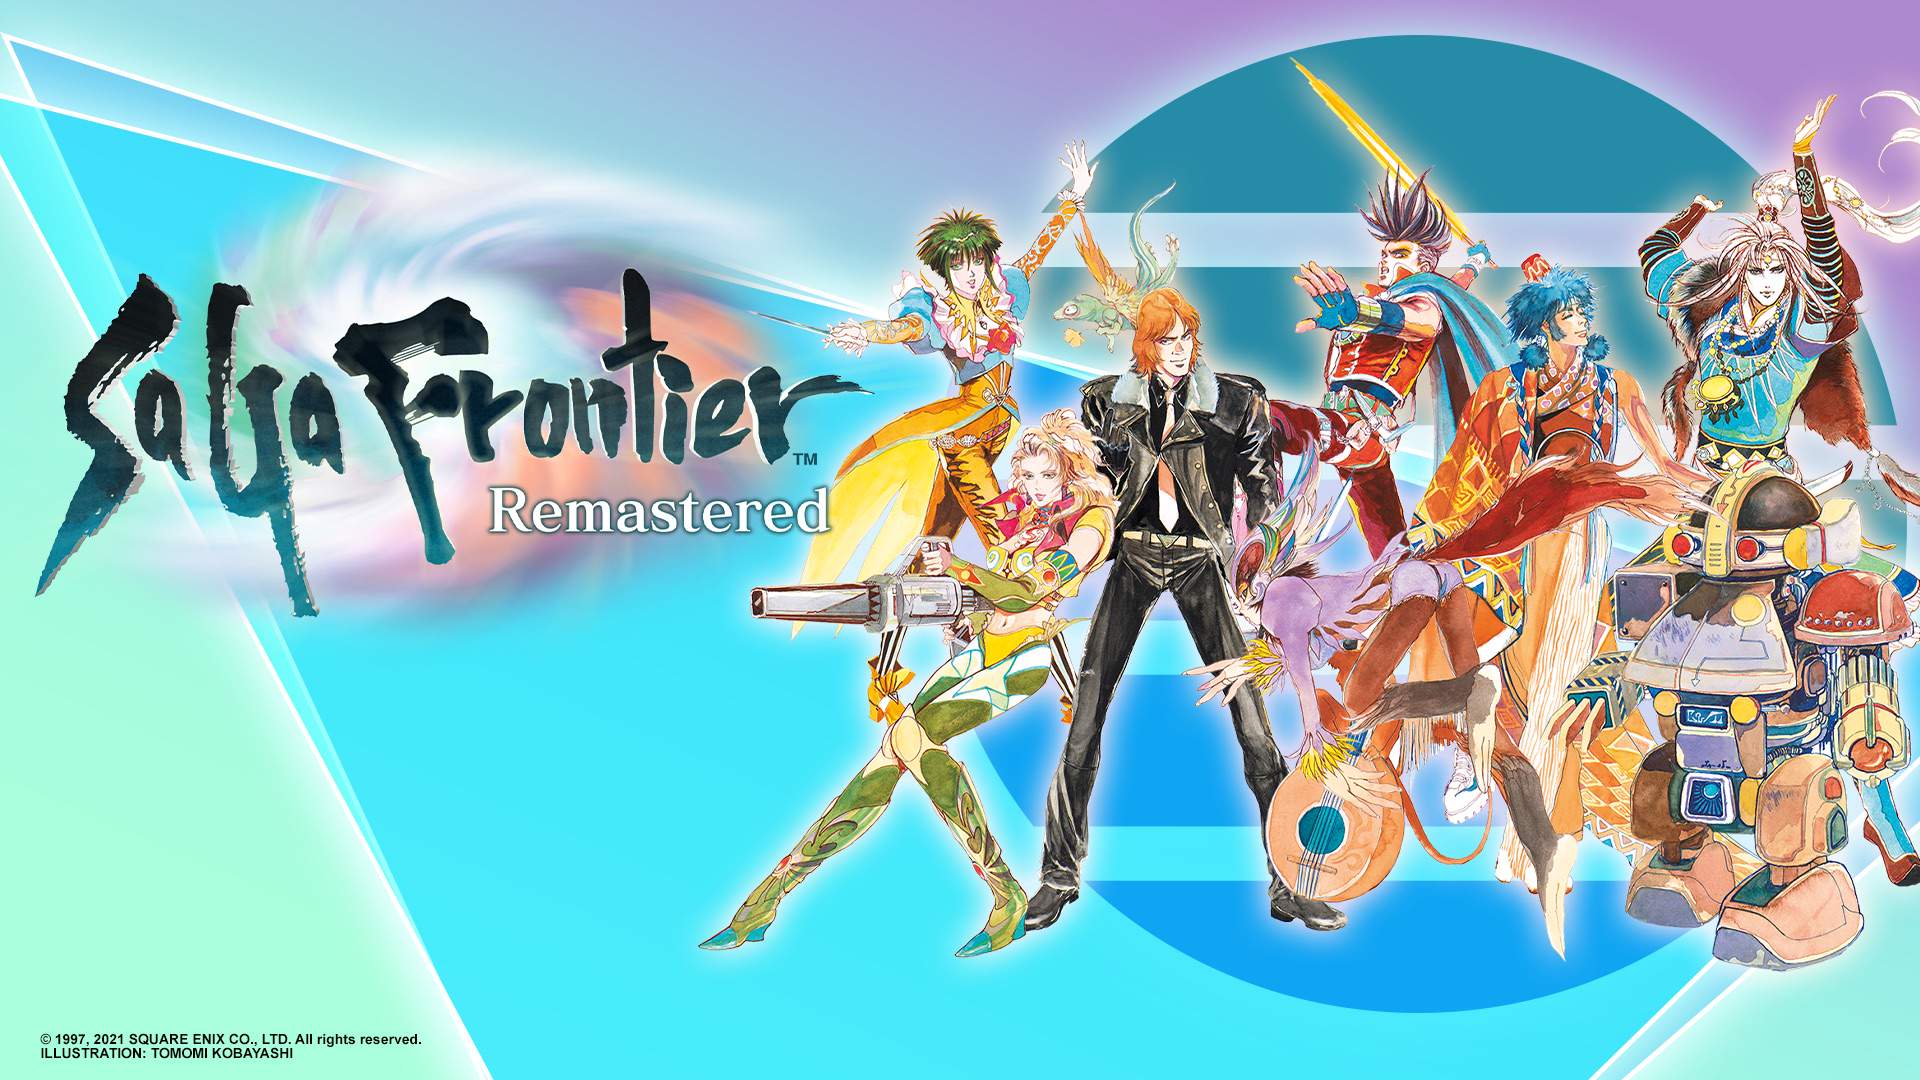 Saga_Frontier-Remastered_art-w8s0ezpji.jpg